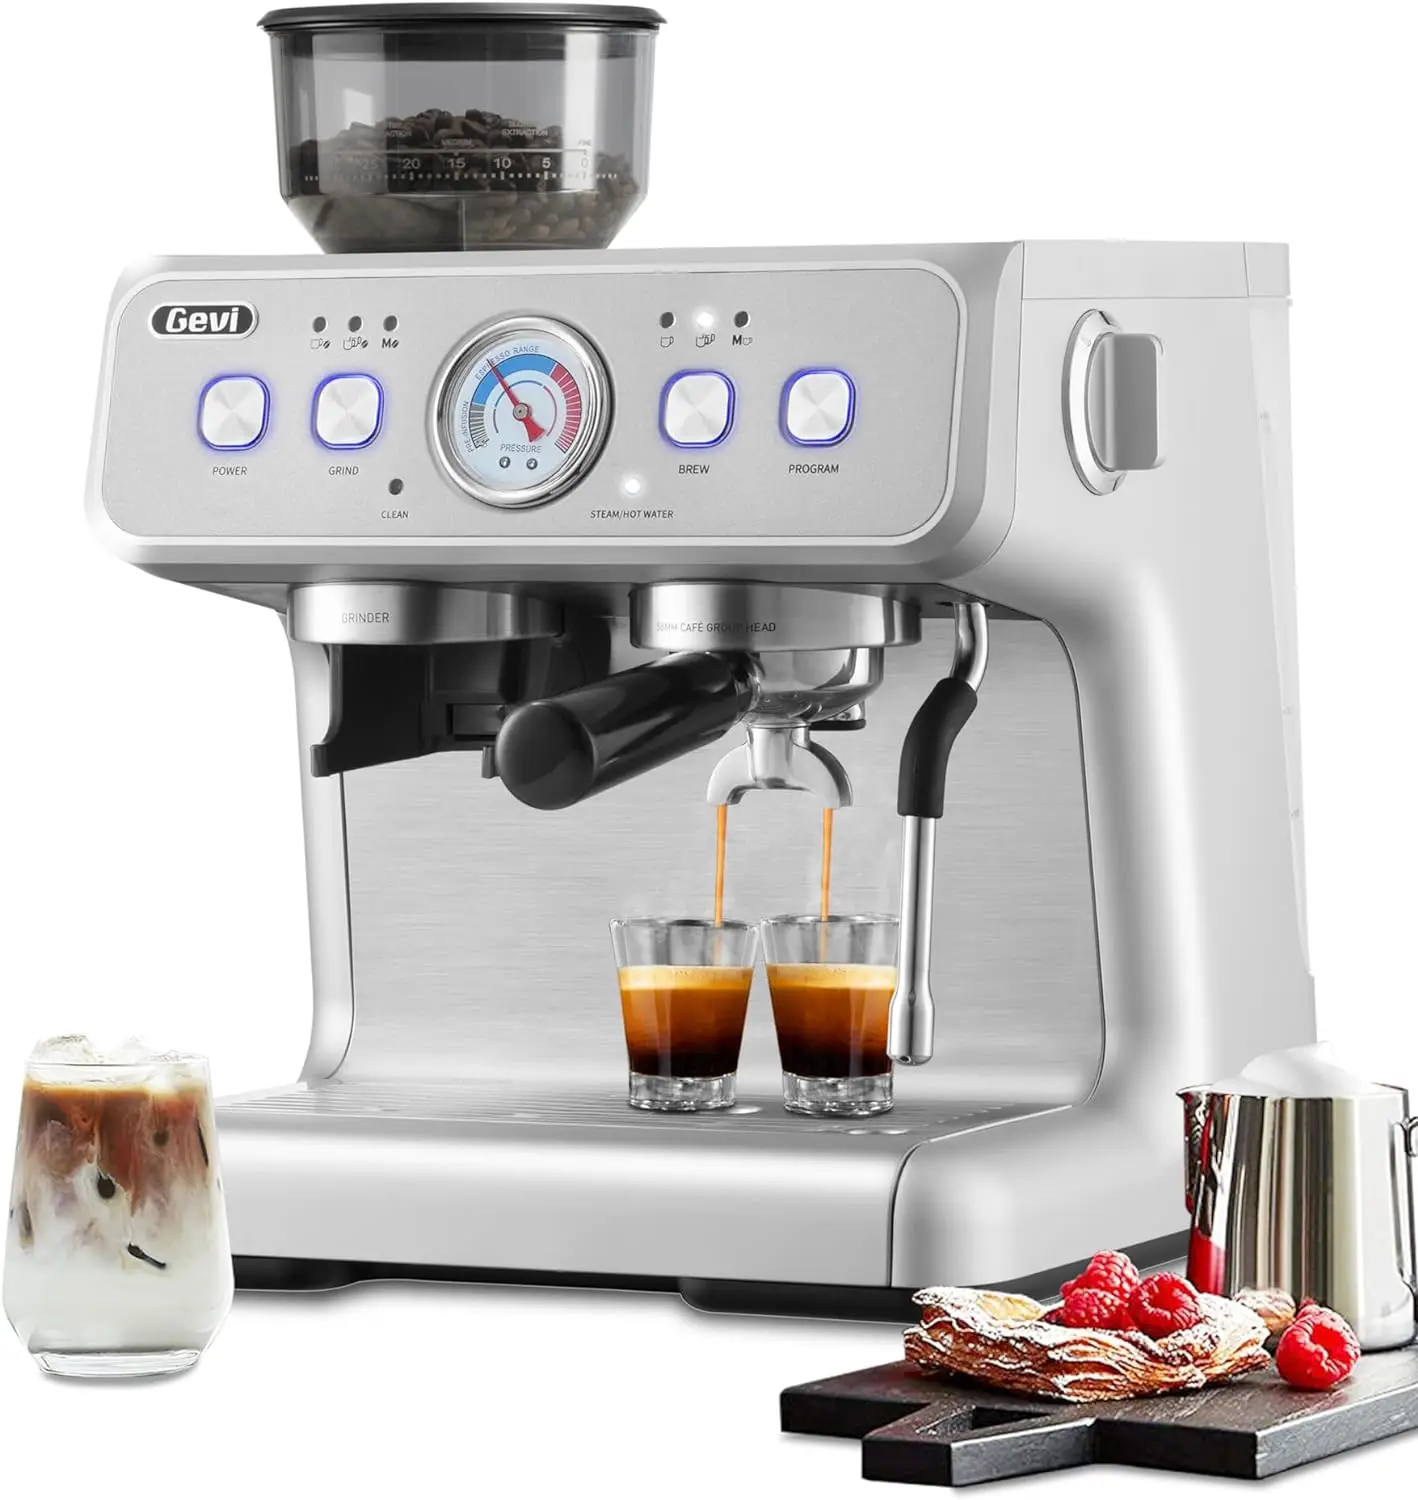 

Gevi Espresso Machine With Grinder, 20 Bar Dual Boiler Automatic Espresso Machine with Milk Frother Wand All in One Espresso